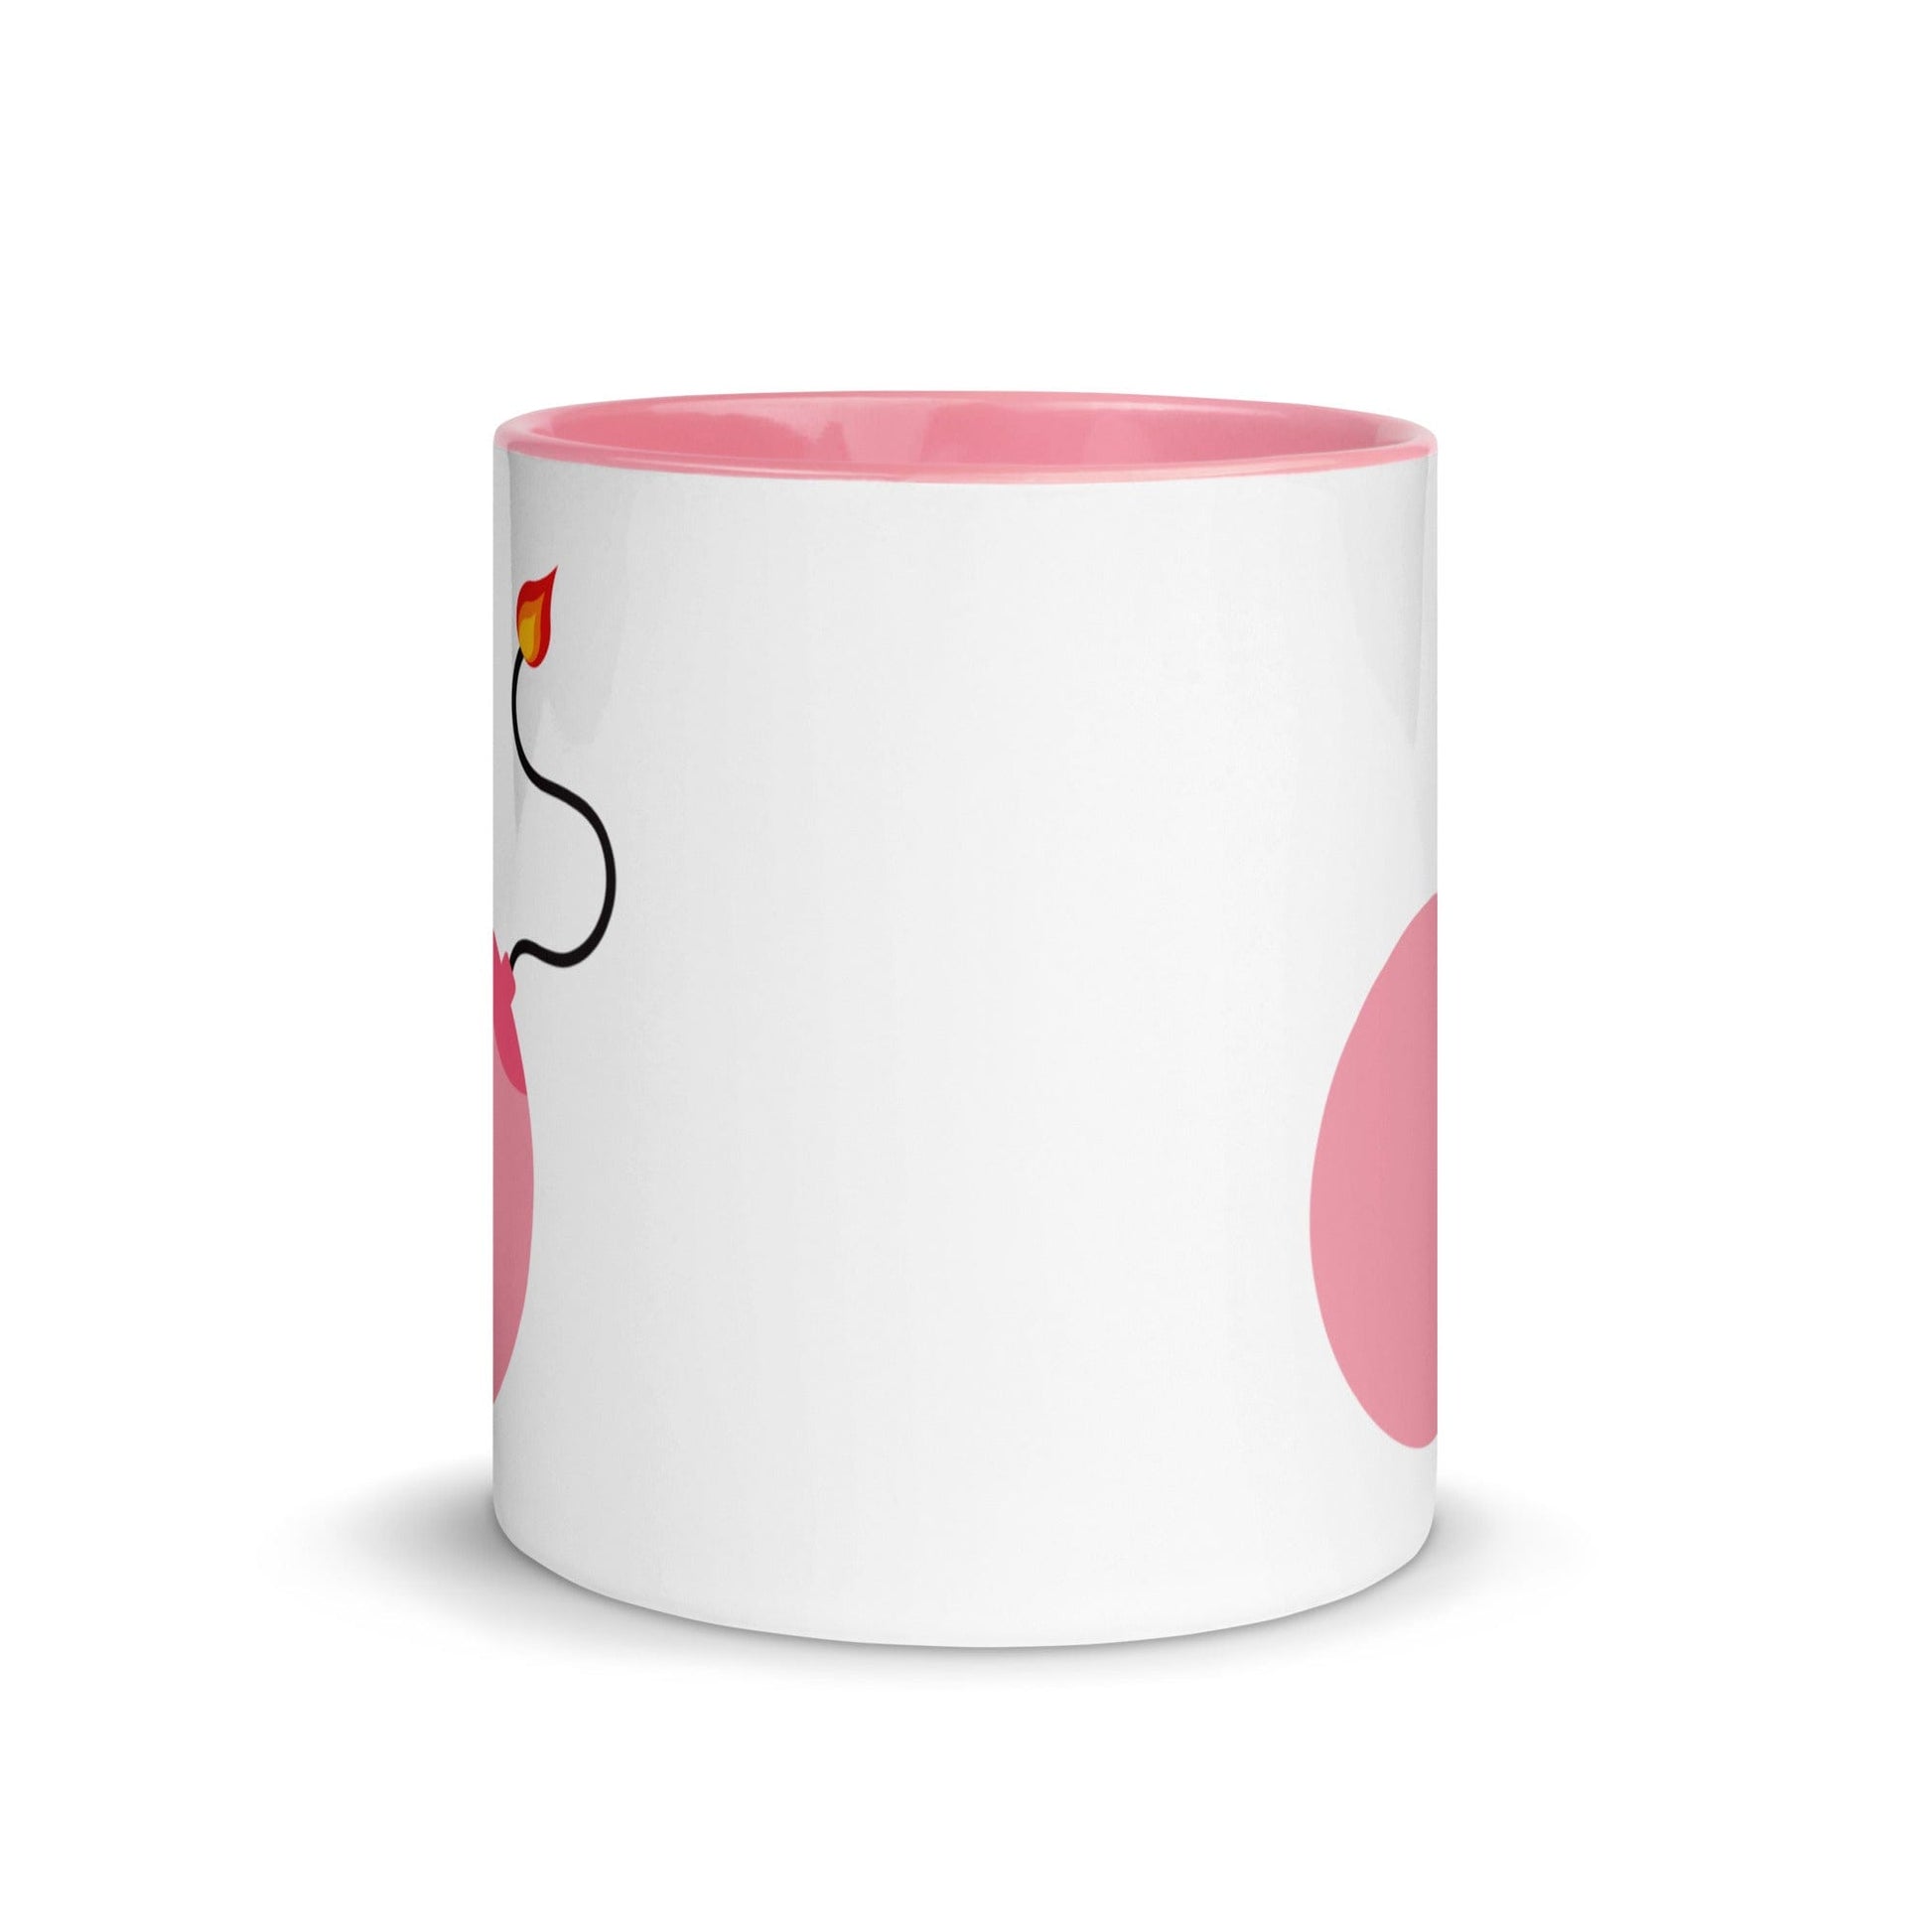 boomb-white-feminist-ceramic-mug-by-feminist-define